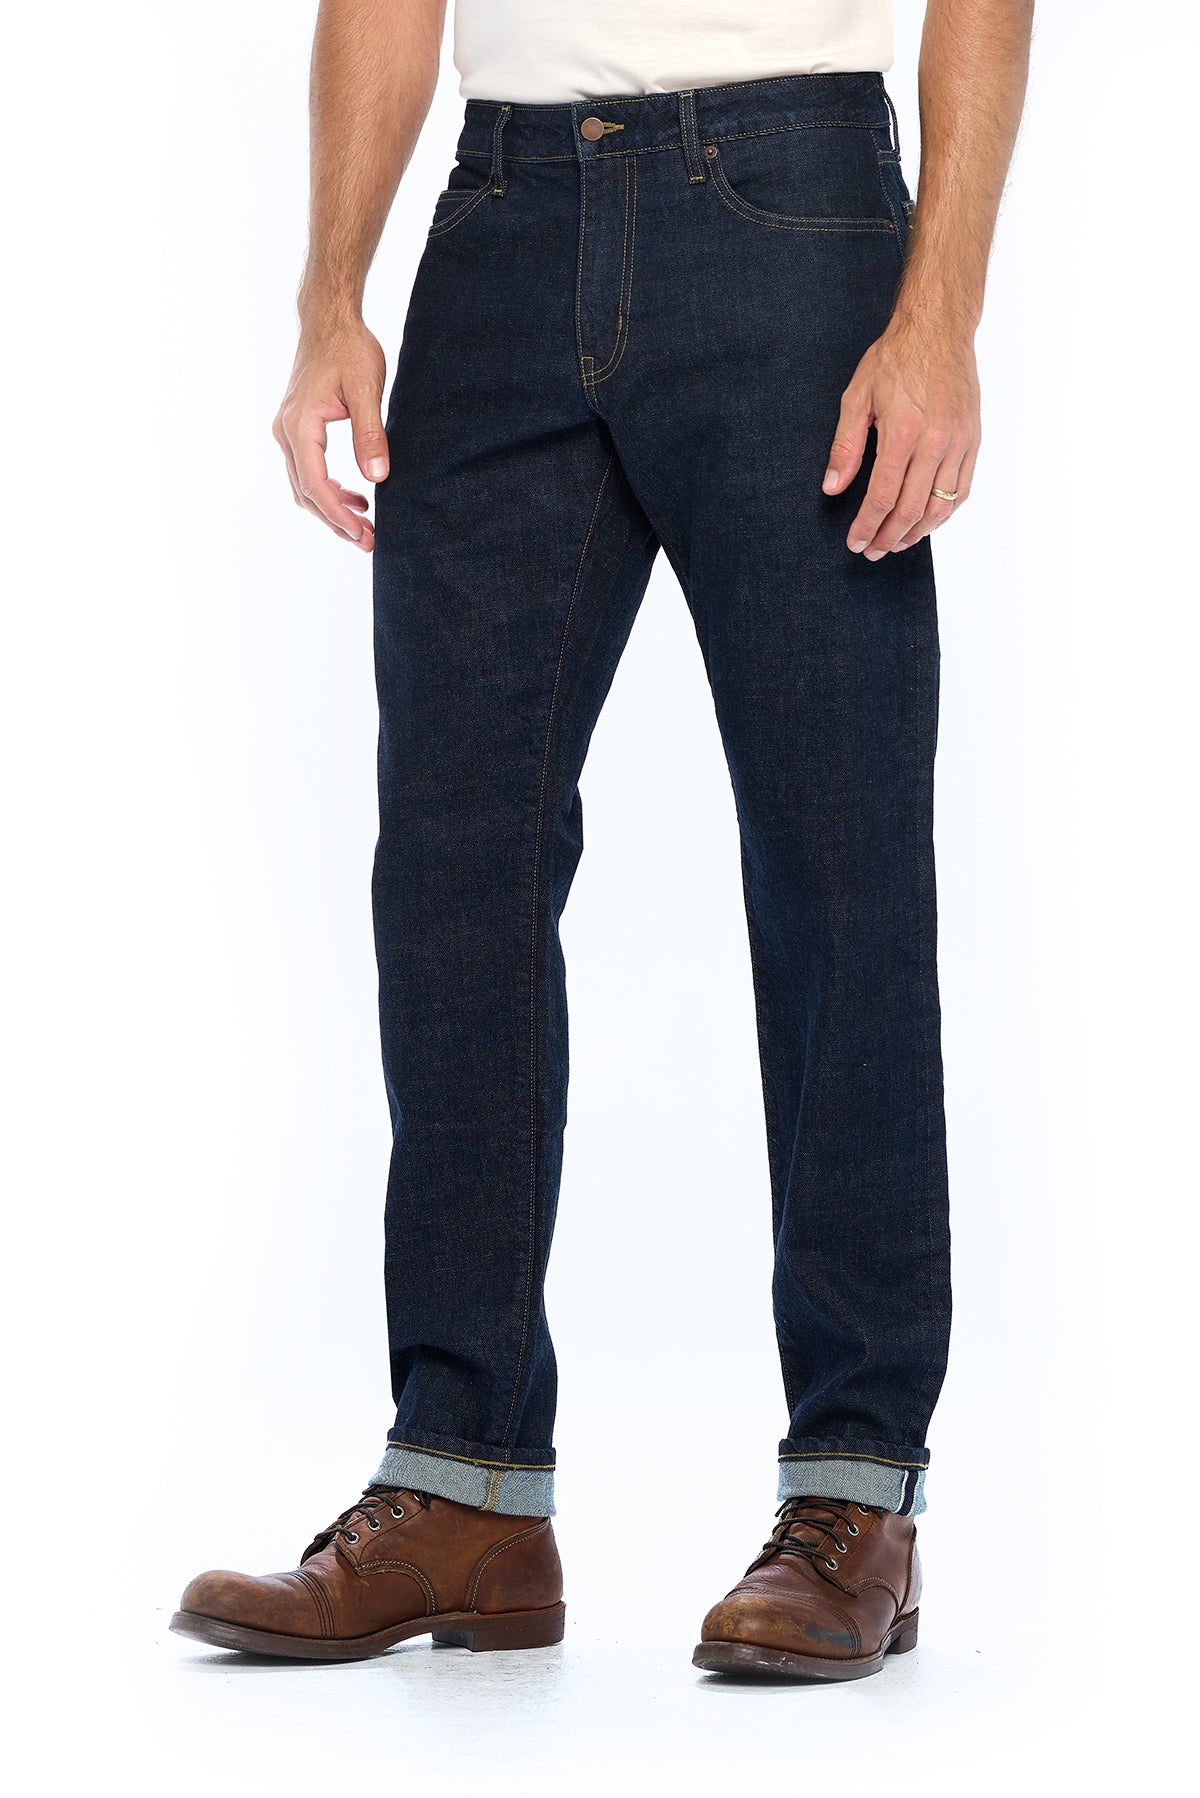 Men's Basic Indigo Jeans | Stylish men, Mens outfits, Indigo jeans